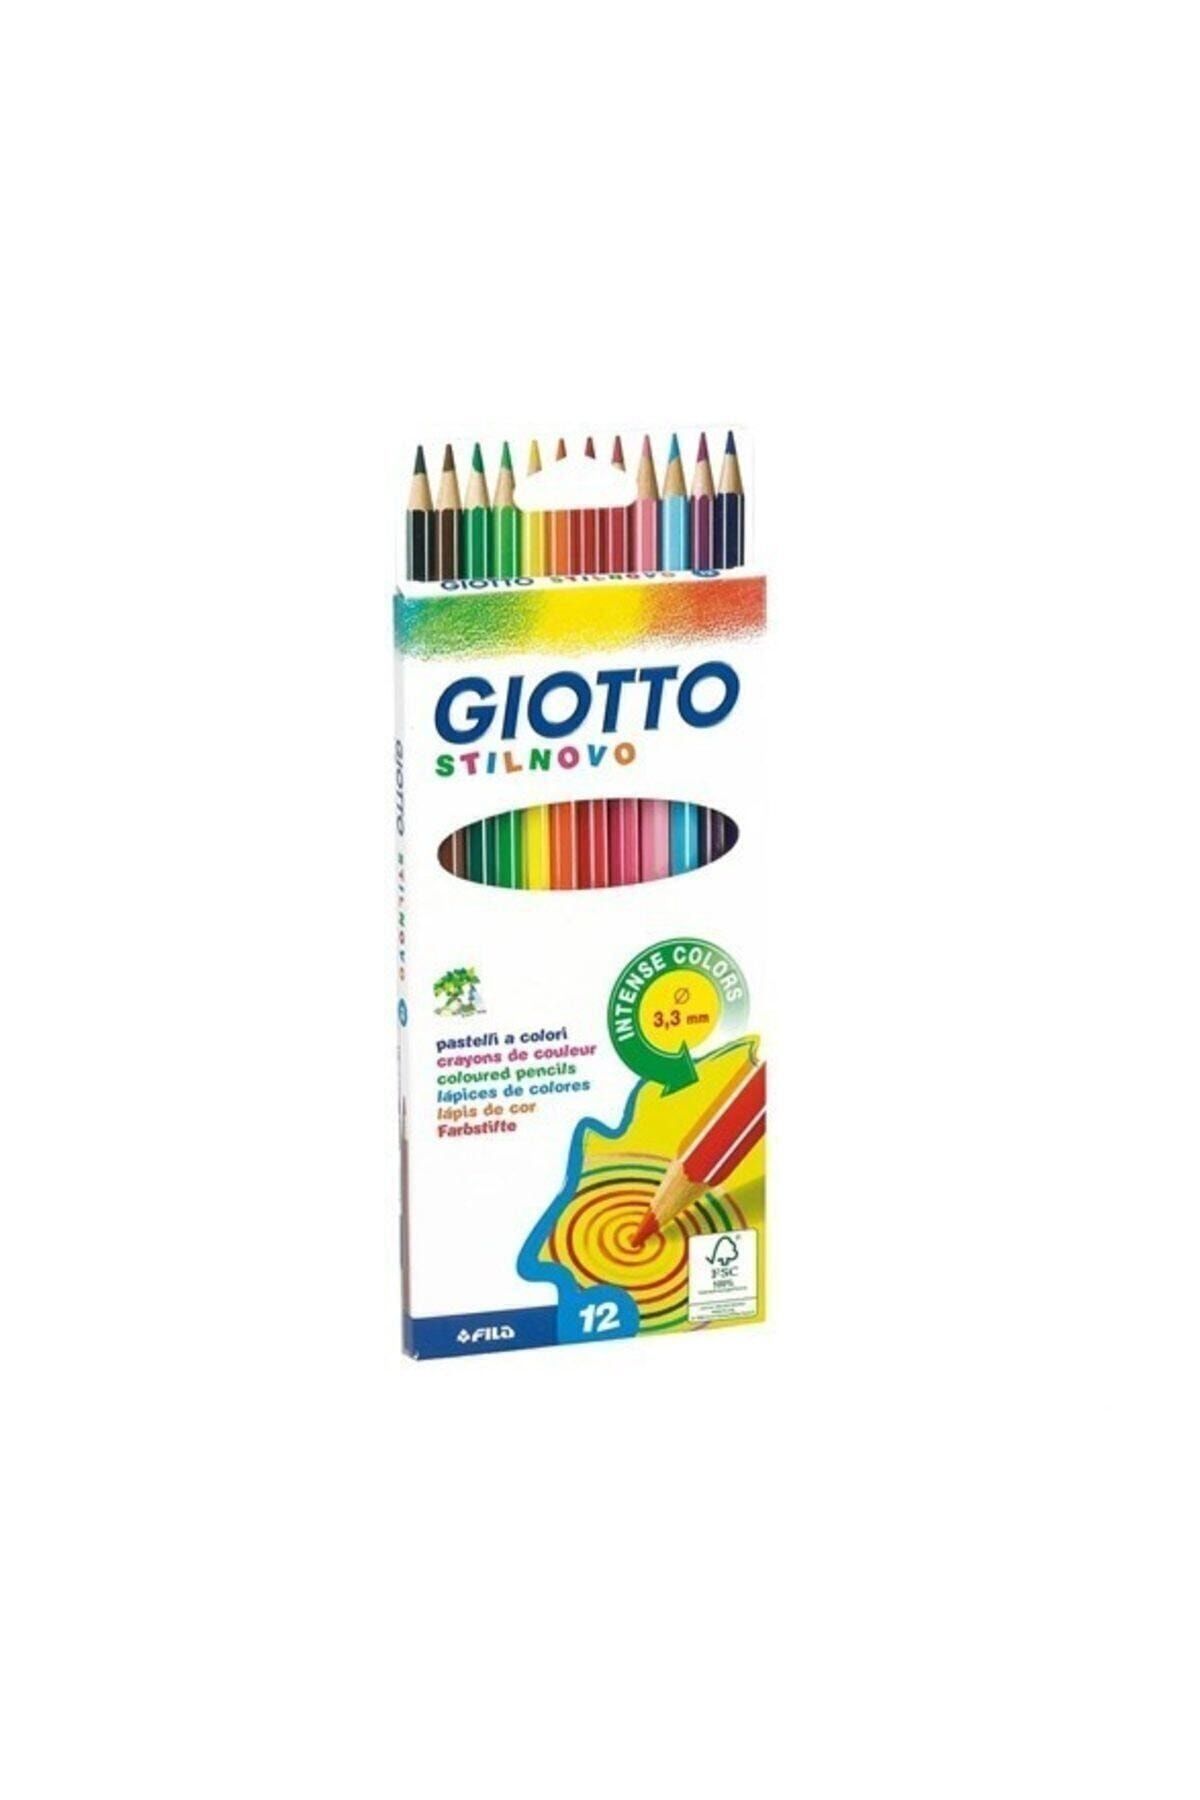 Giotto Stilnovo Kuru Boya Kalemi Askılı Paket 12'li 256500